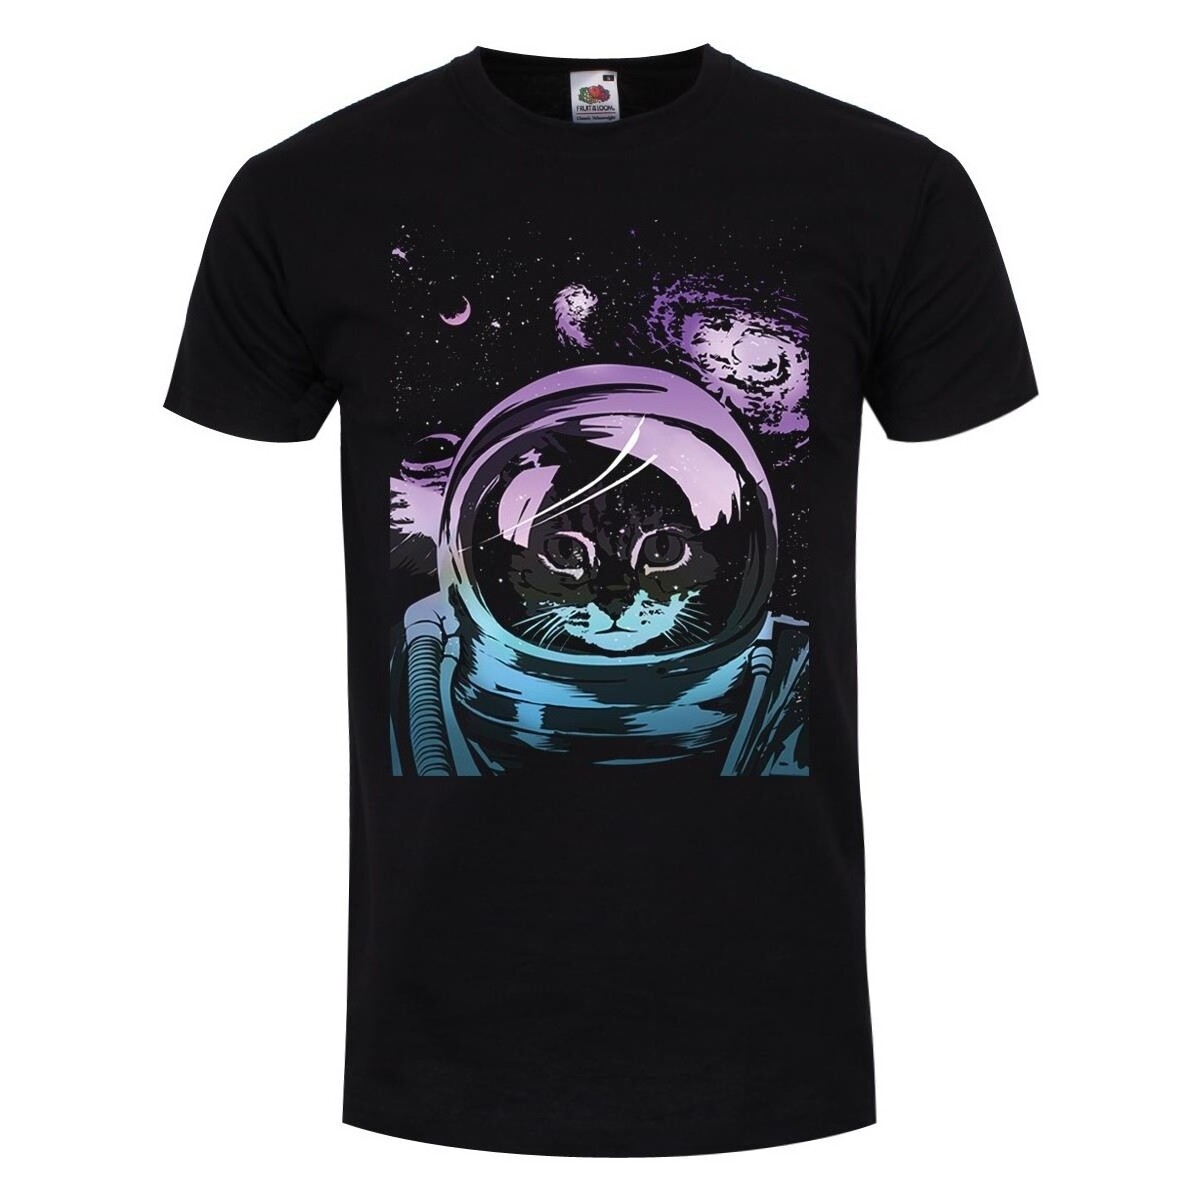 Vêtements Homme T-shirts manches longues Unorthodox Collective Space Kitten Noir